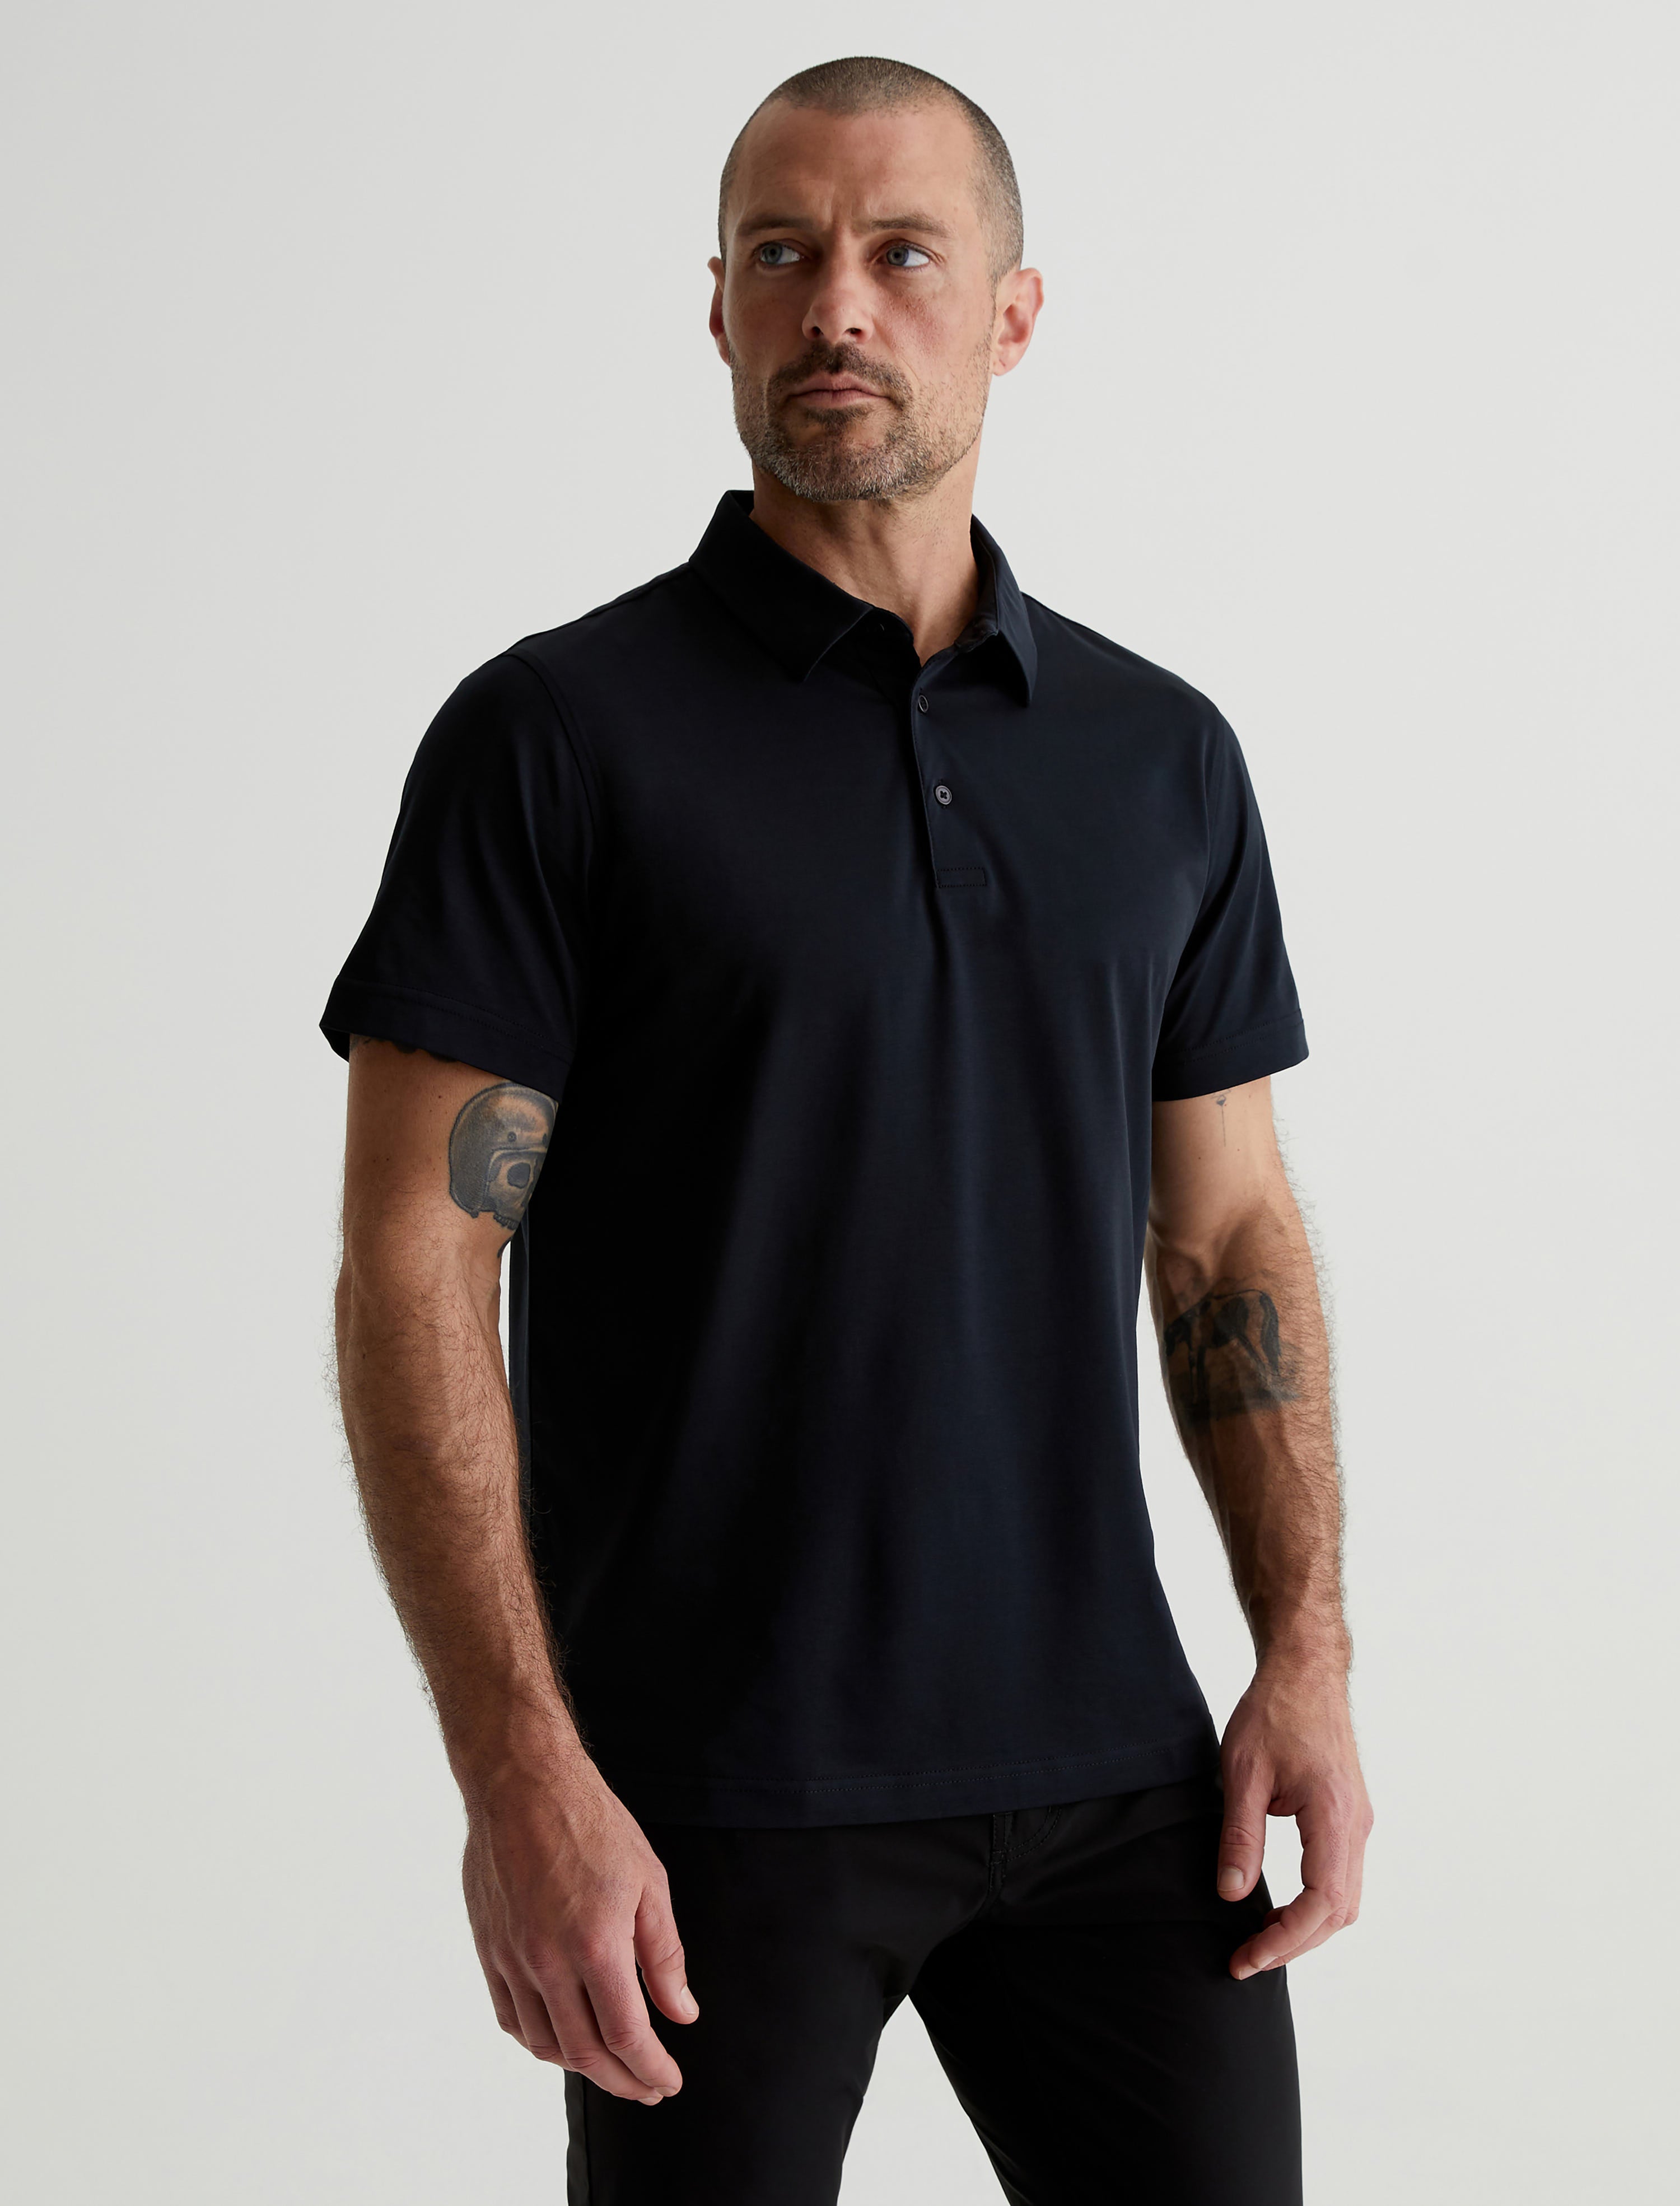 Ace S/S Polo True Black Classic Fit Short Sleeve Polo T-Shirt Men Top Photo 1